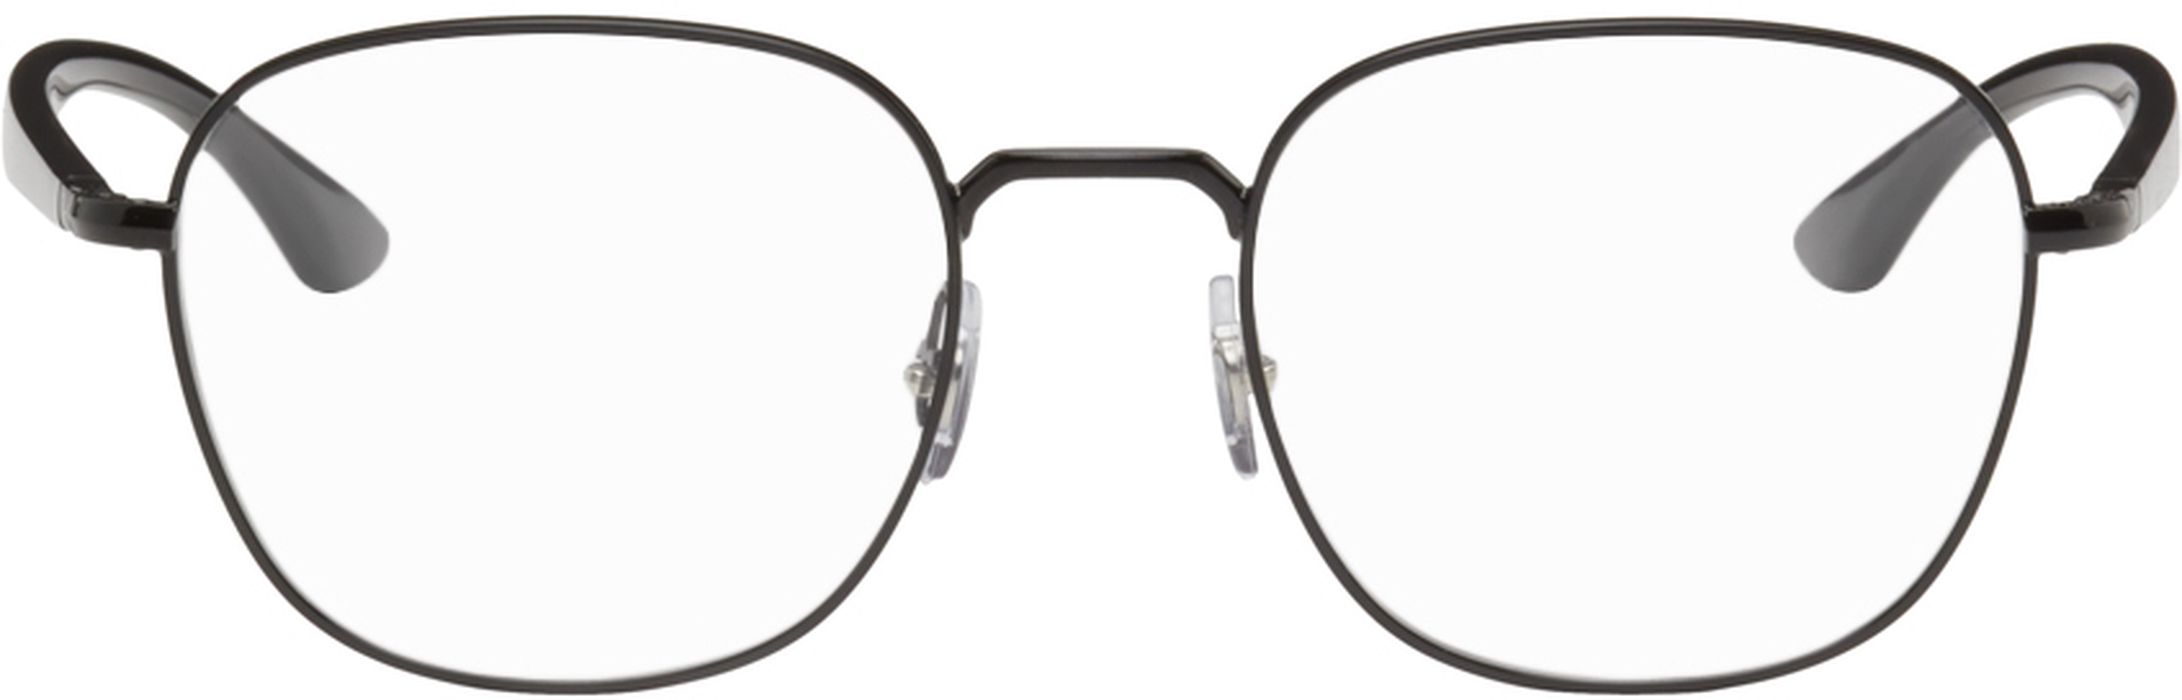 Ray-Ban Black RB6477 Glasses